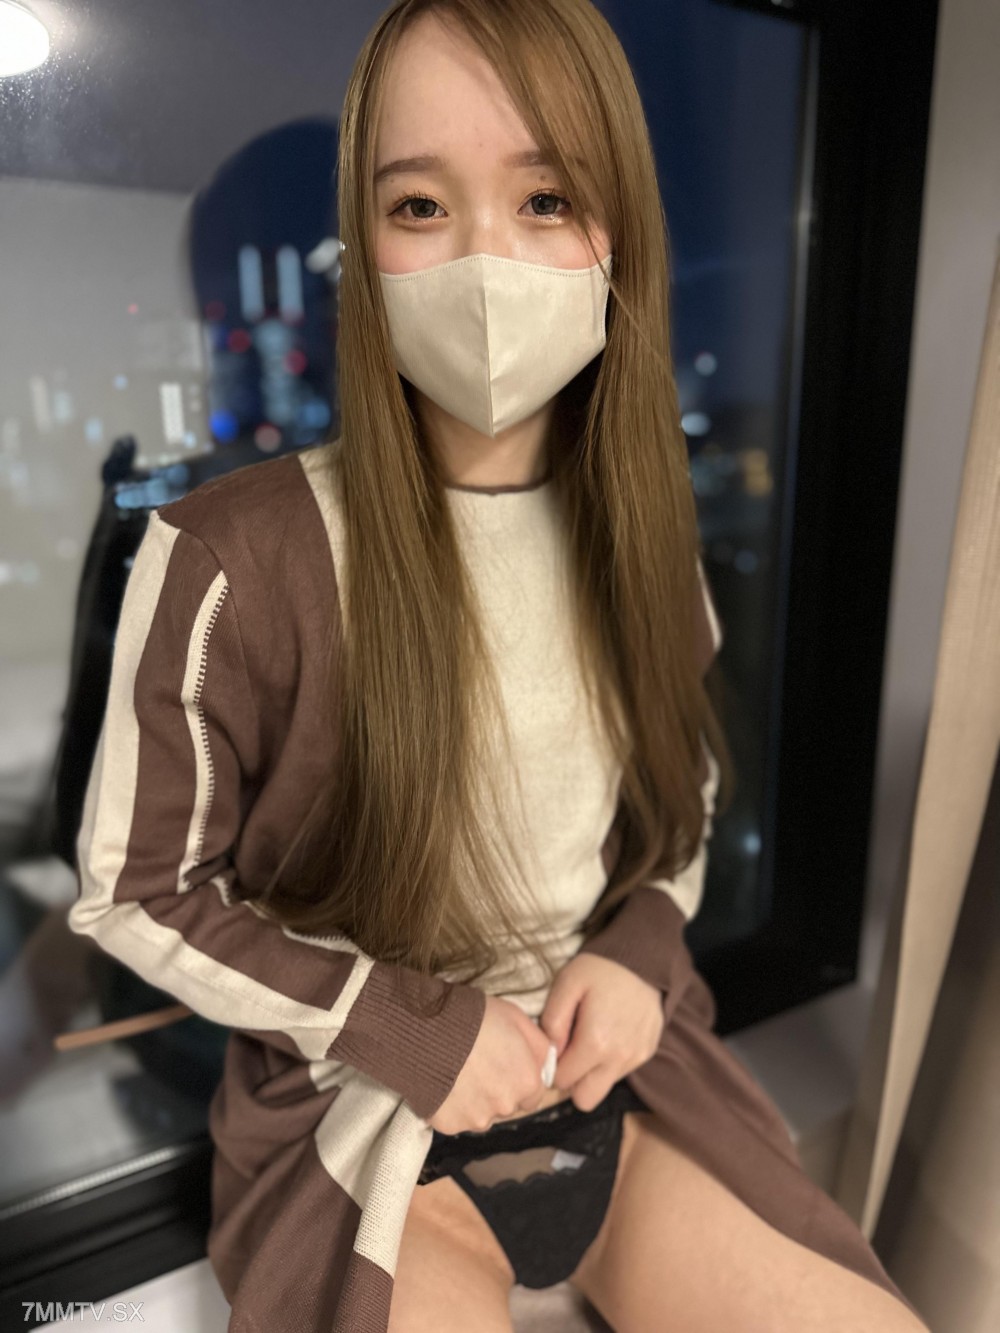 FC2-PPV-4411764 [Shen/Woman] First shot♡ Face mask peeling takeshi foolish milk poss♡ 